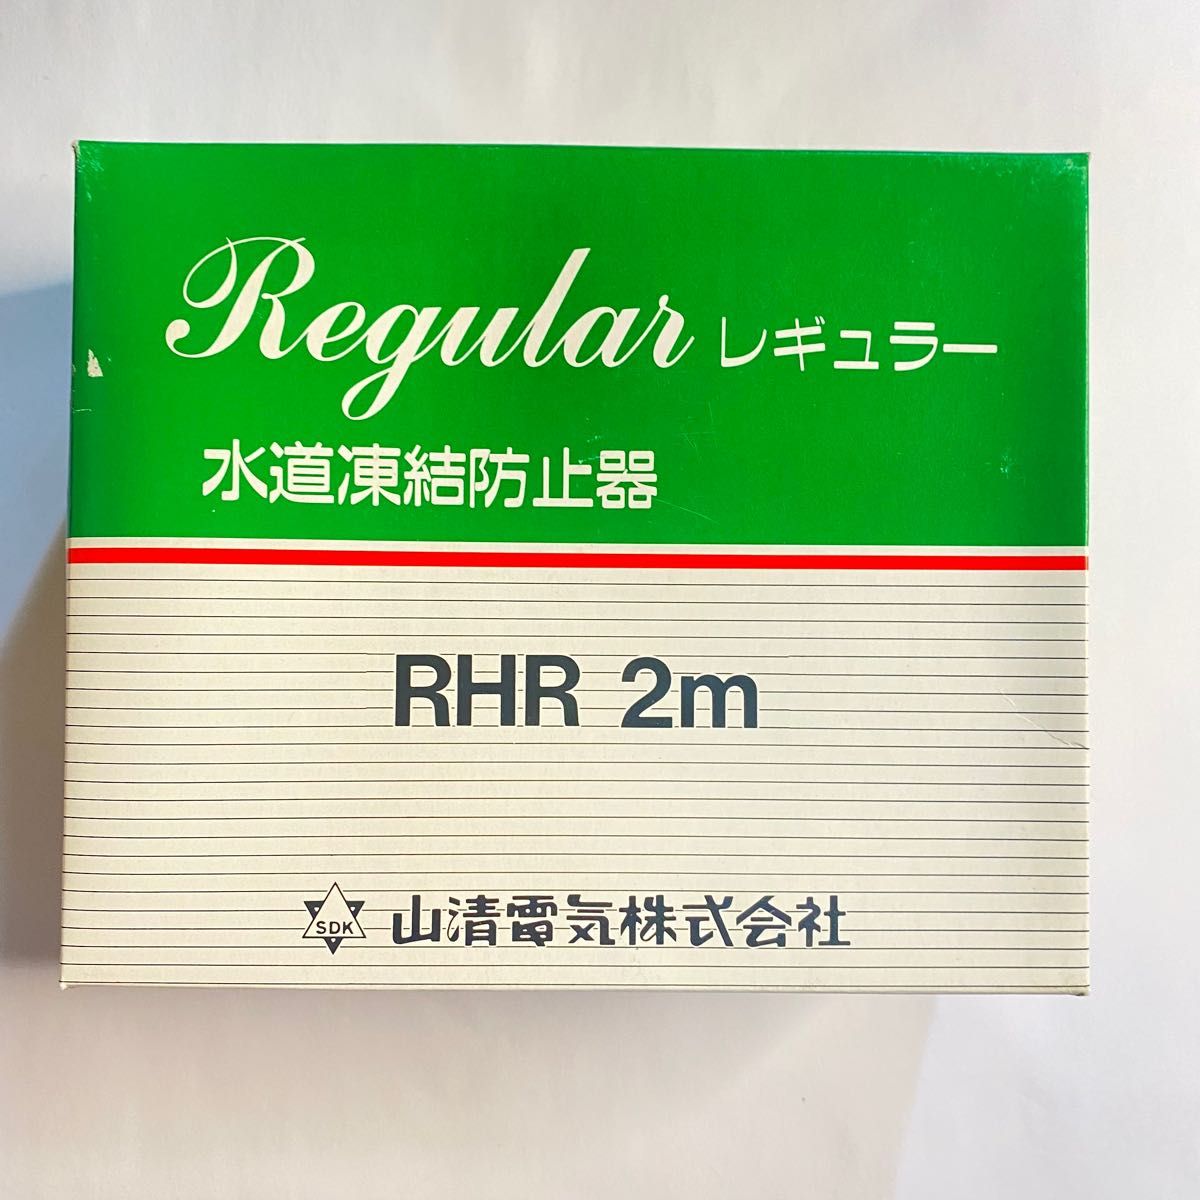 【水道凍結防止器】山清　凍結防止器 RHR2m 5個セット